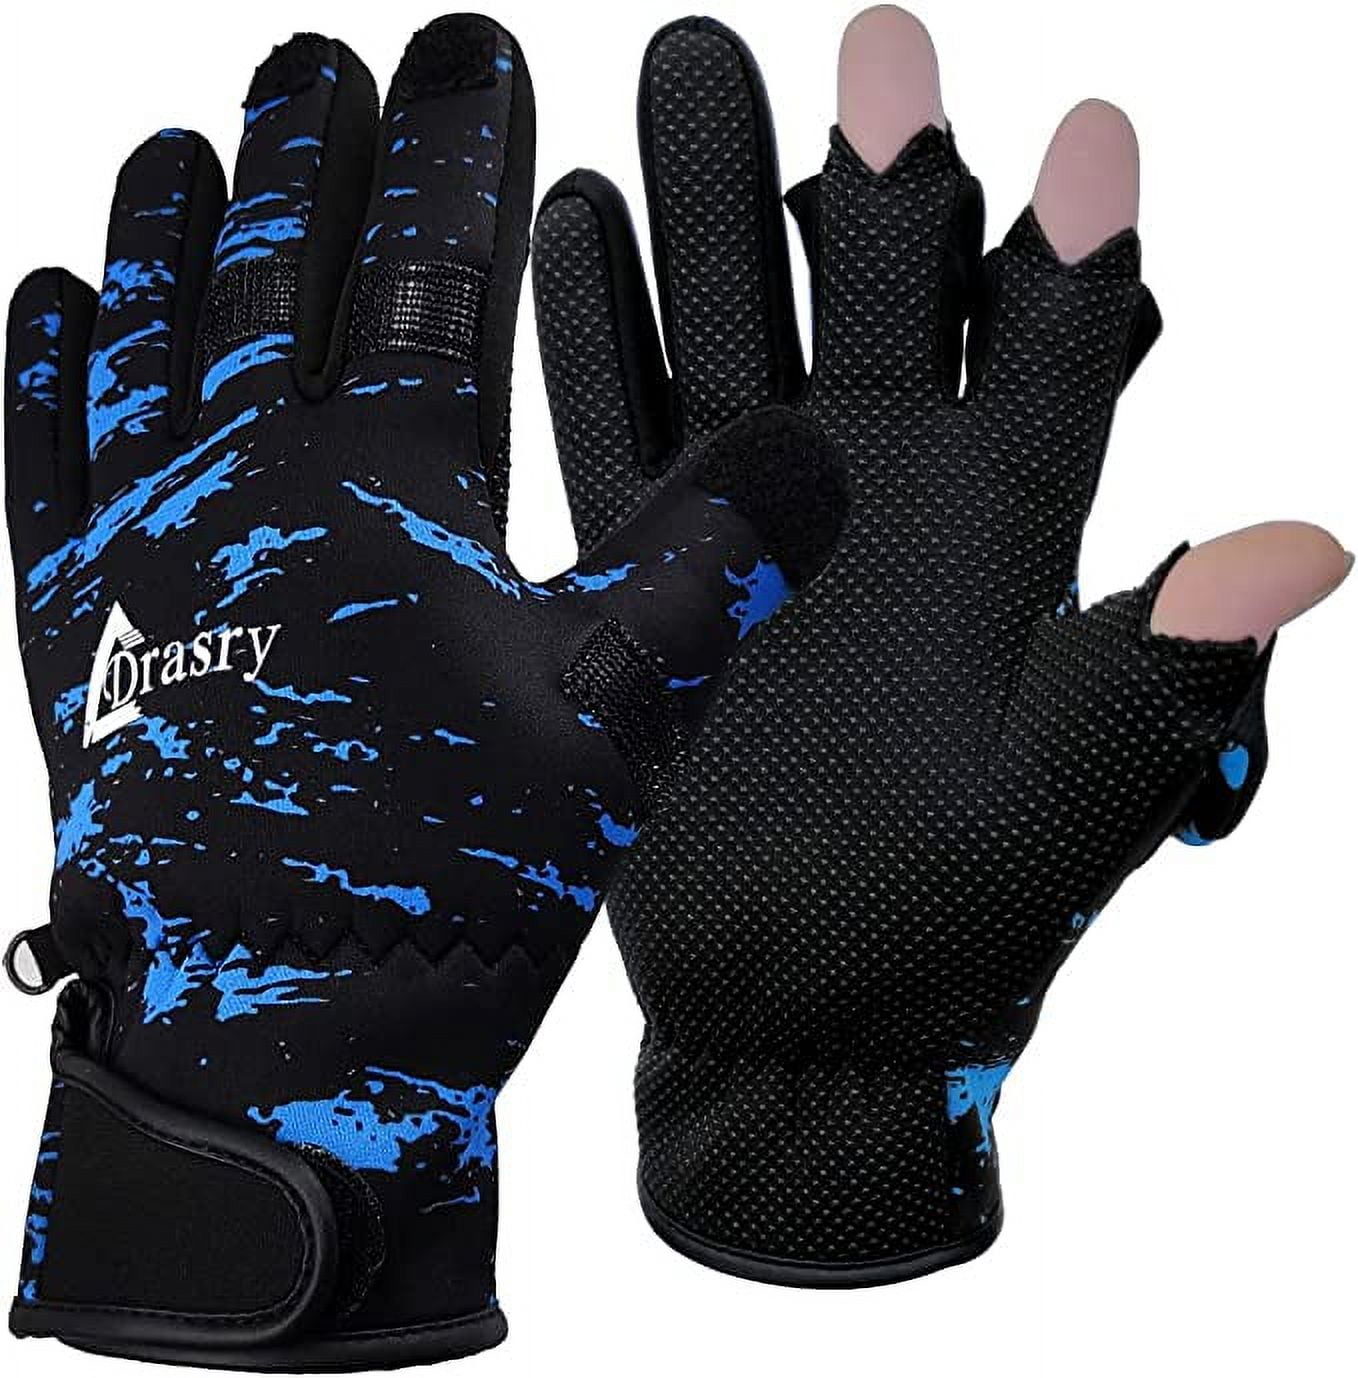 Drasry Neoprene Gloves Touchscreen 3 Cut Fingers Warm Cold